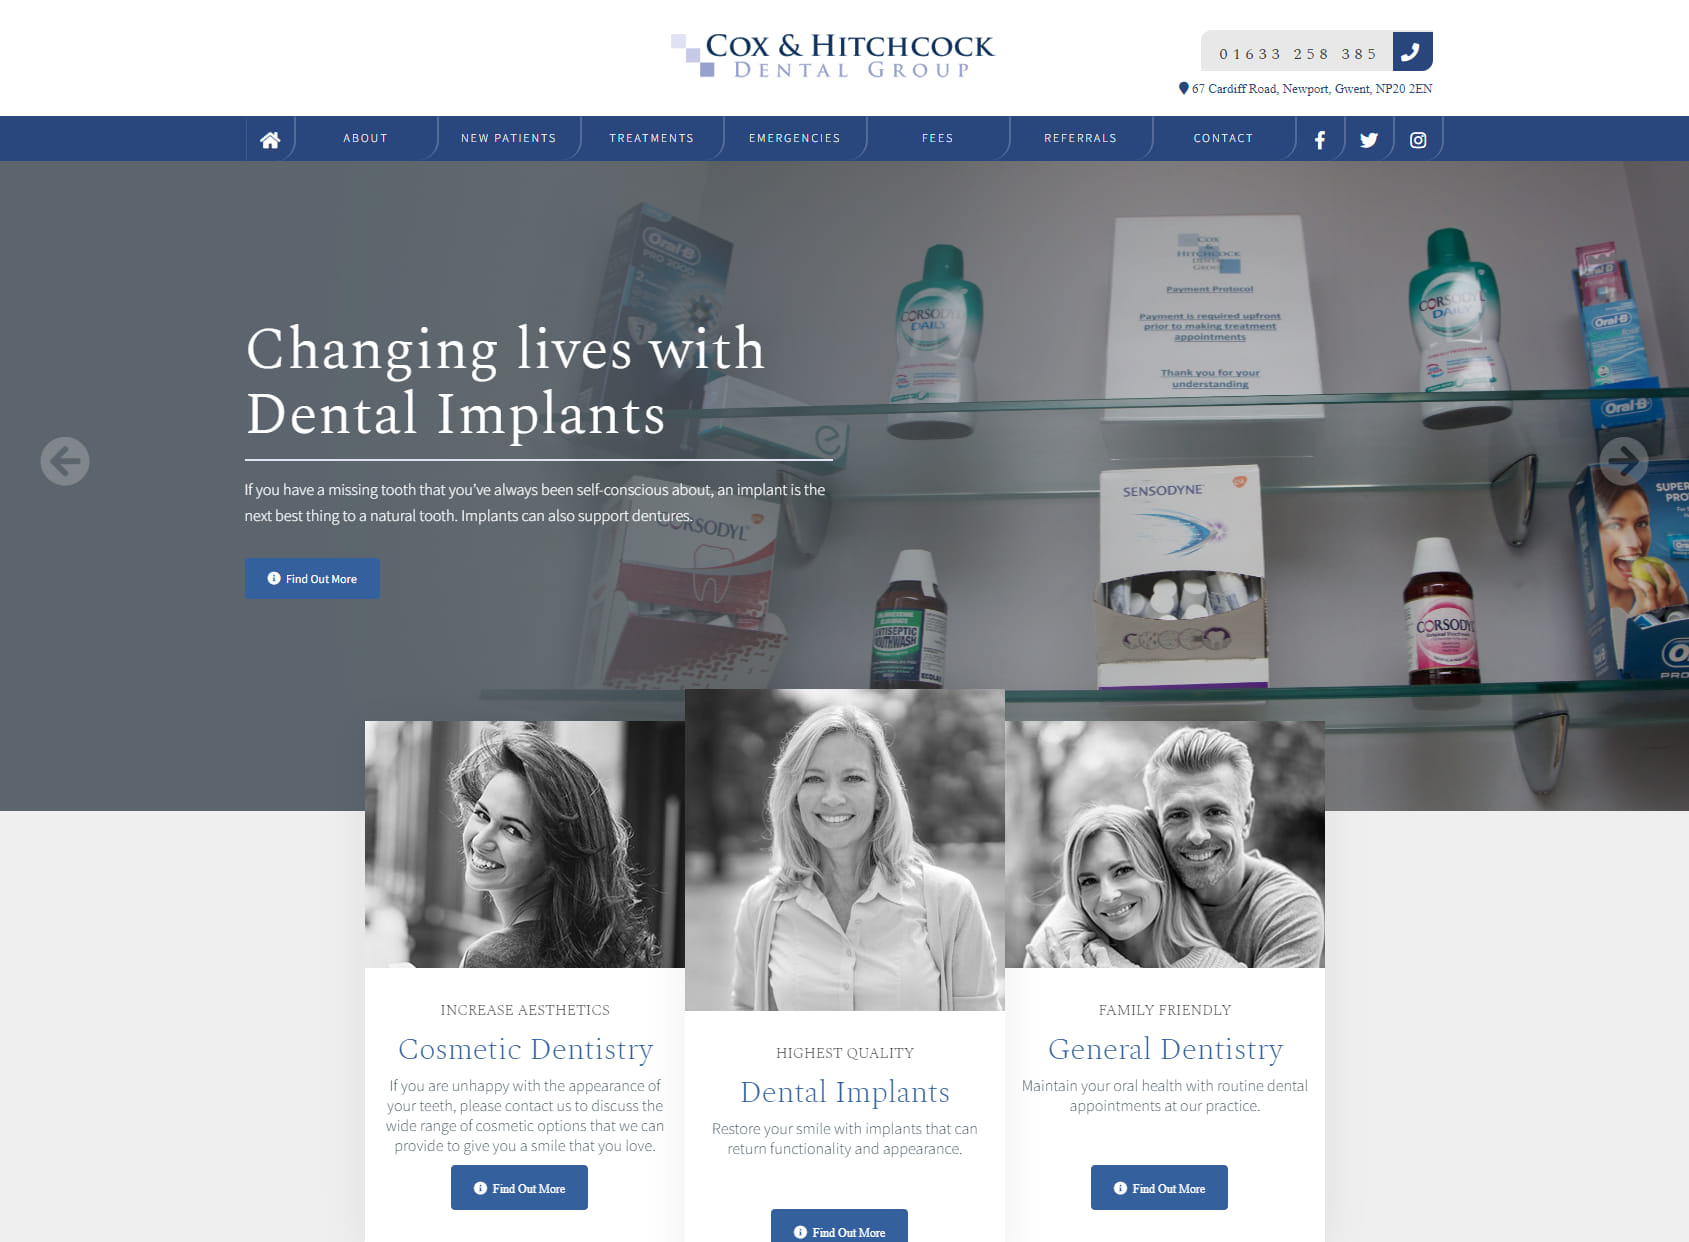 Cox & Hitchcock Dental Group